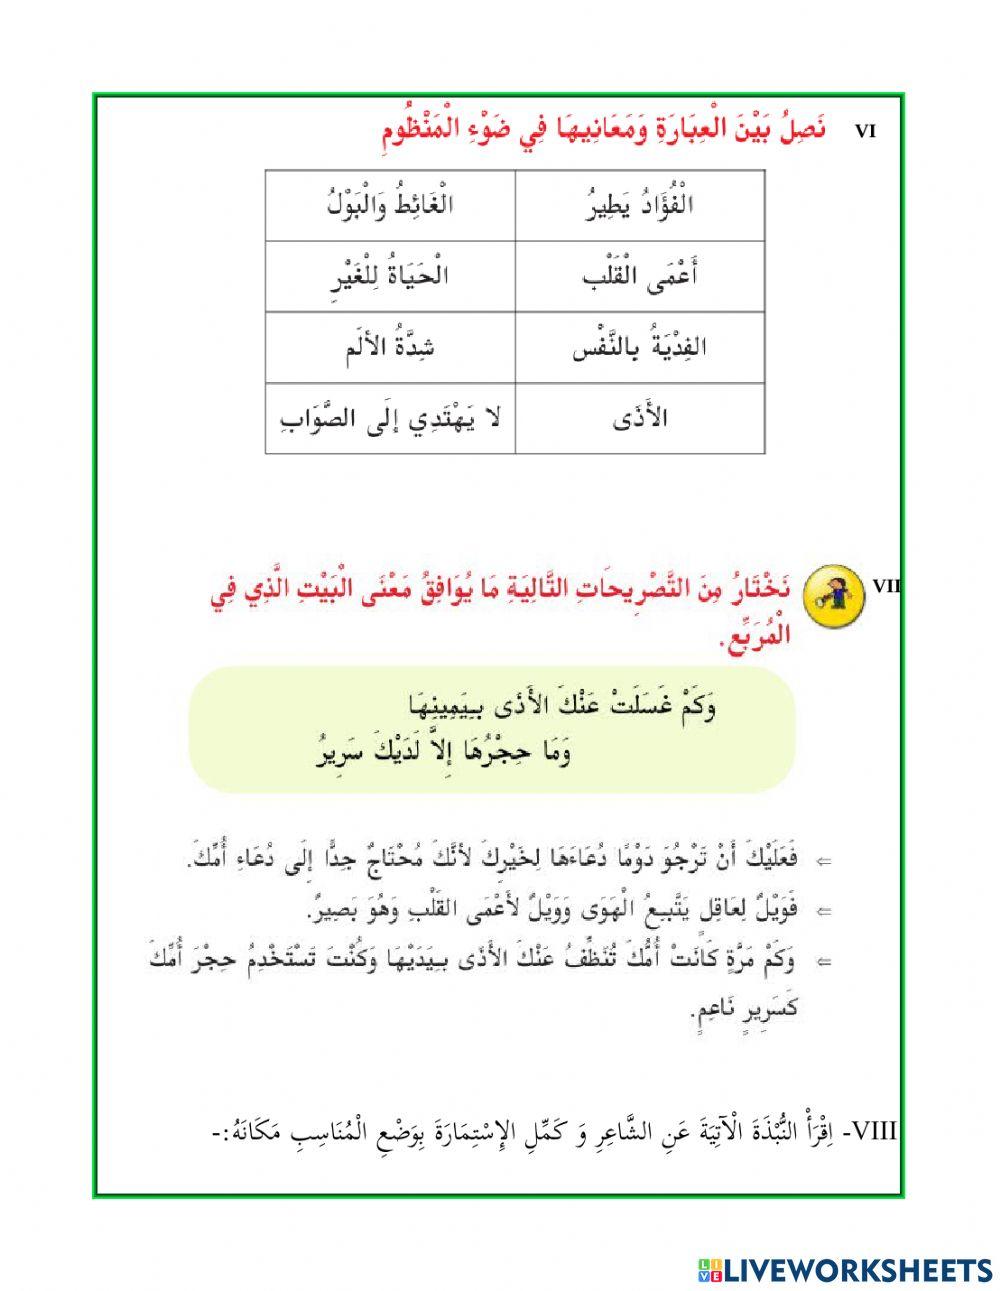 Arabic live work sheet